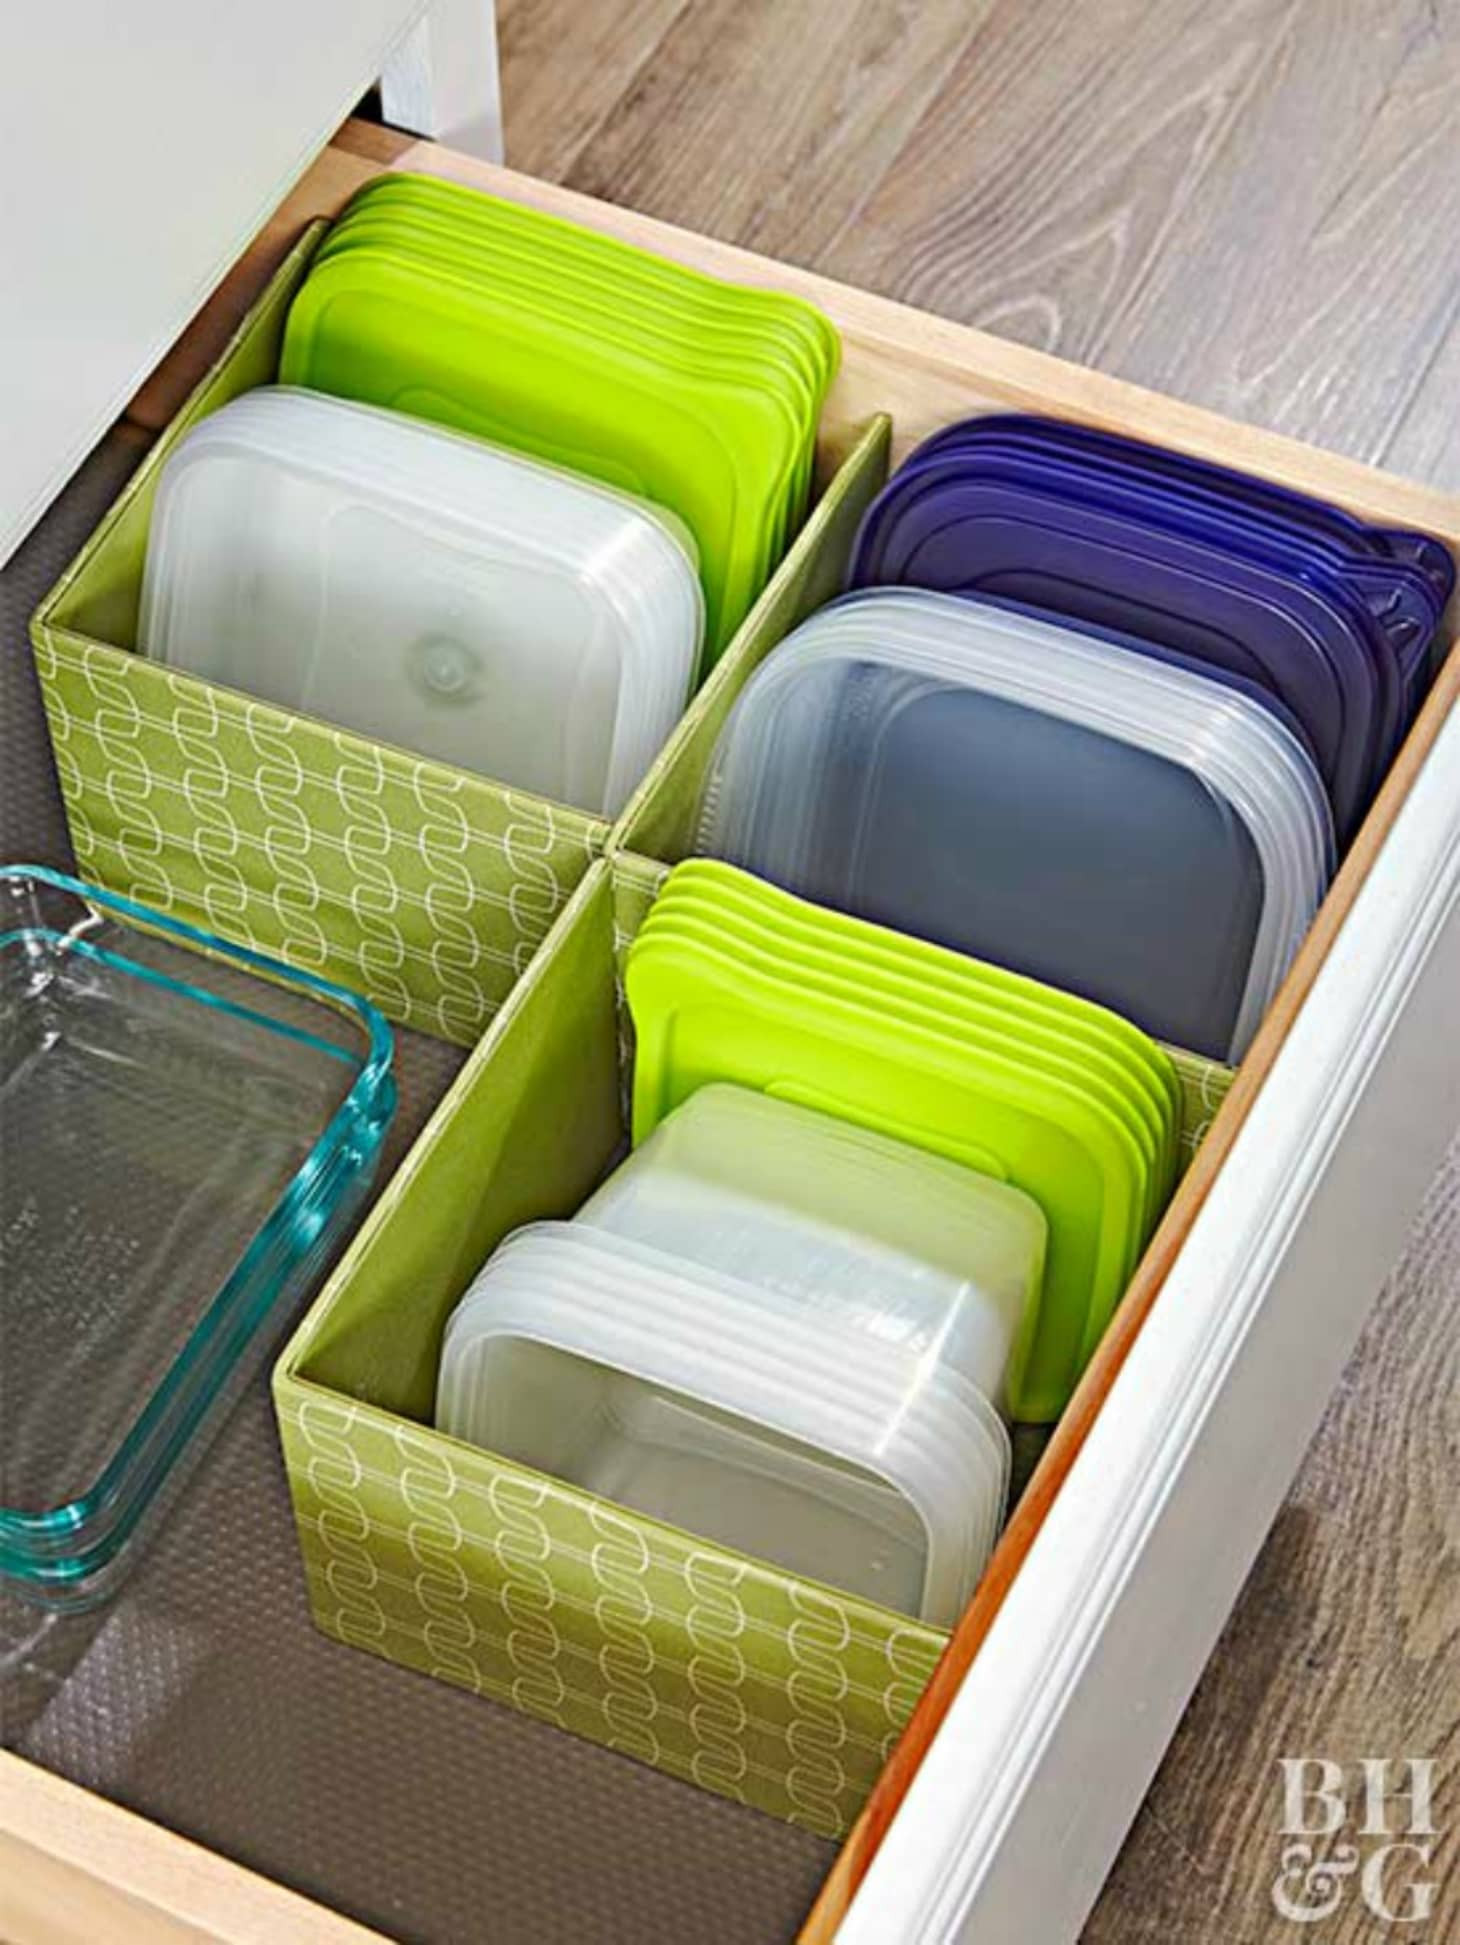 Tupperware Organizer DIY
 7 Clever Ways to Organize Tupperware and Food Storage